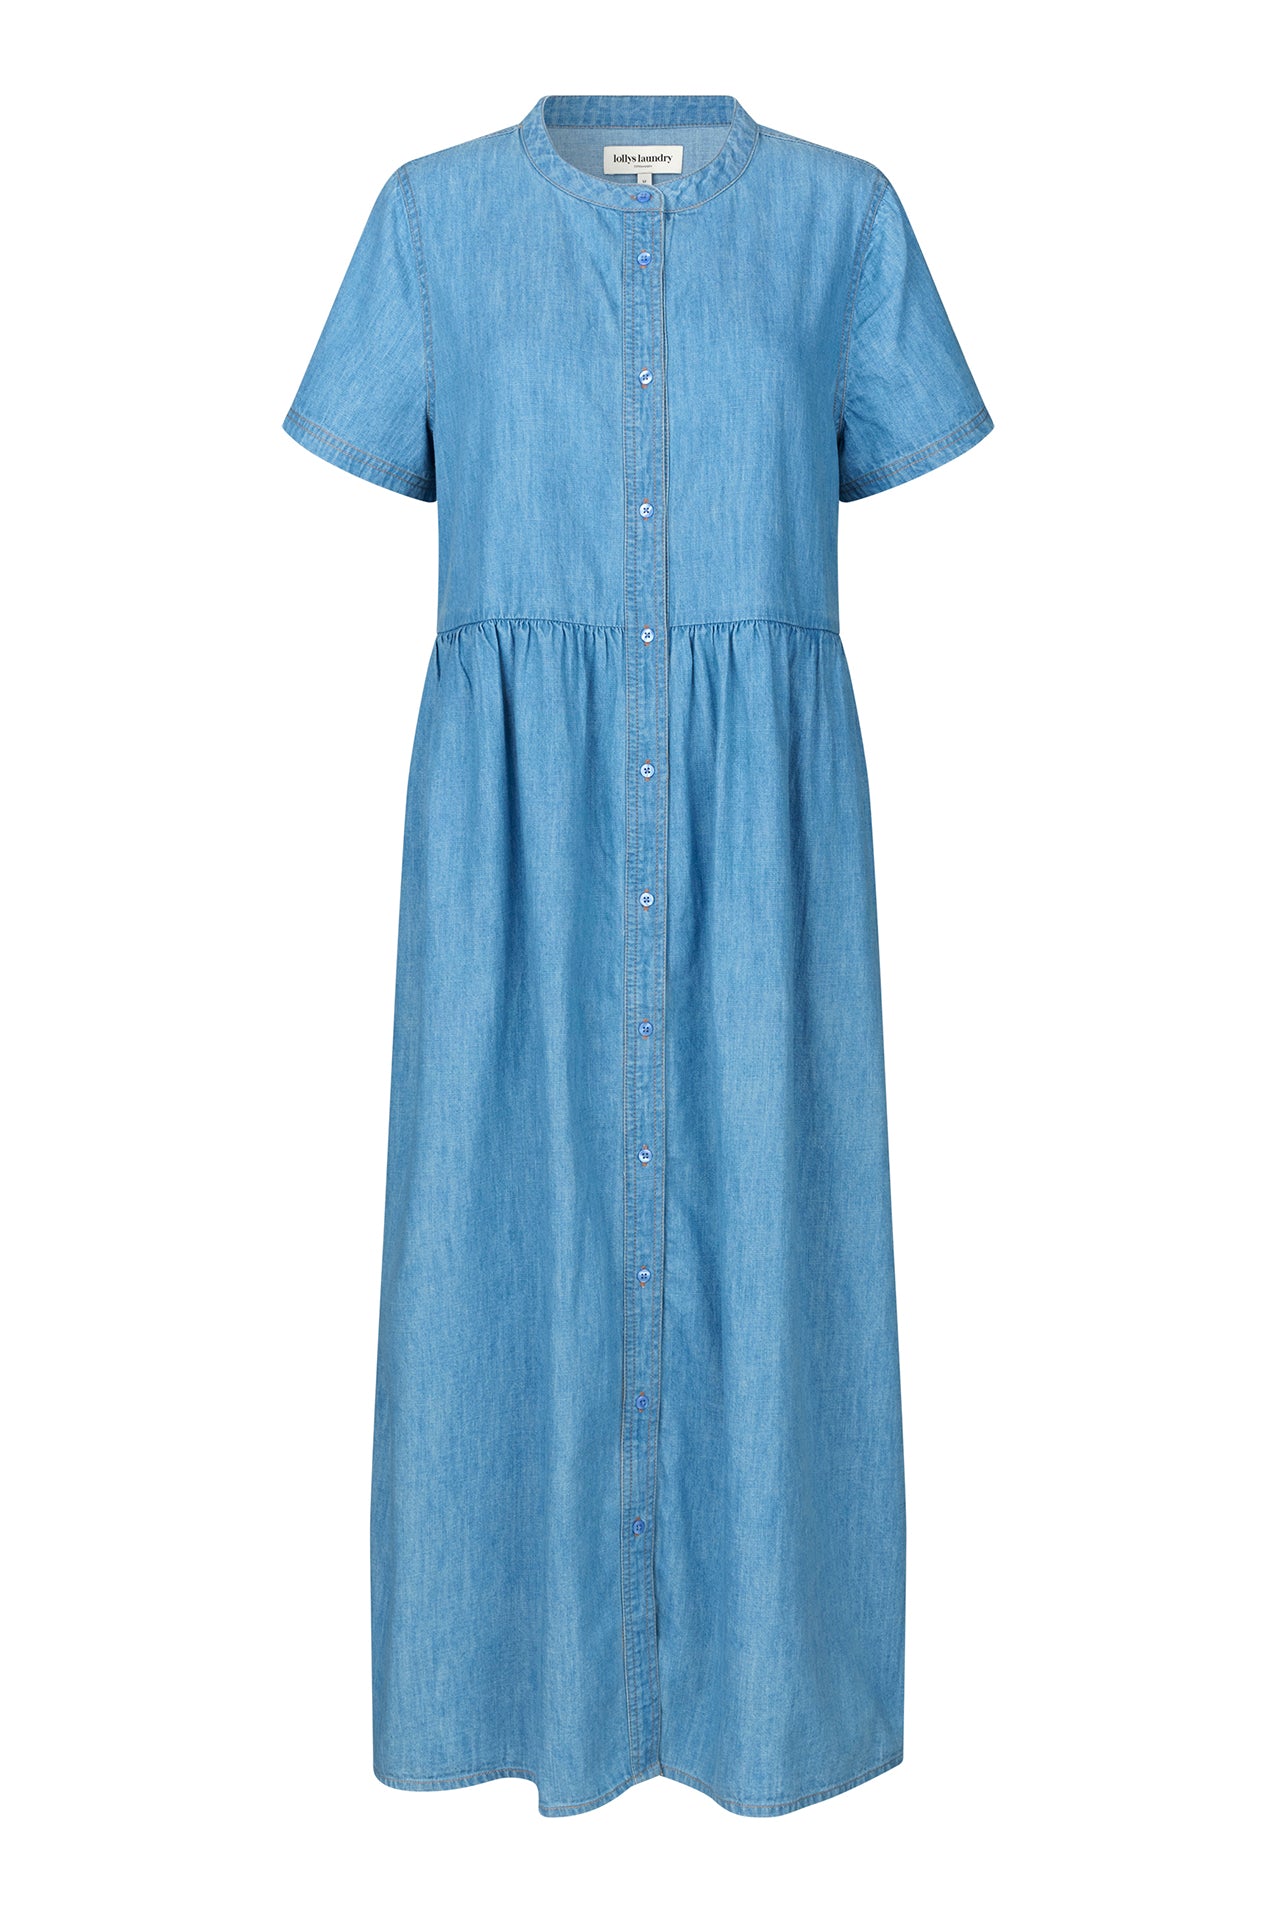 Lollys Laundry AliyaLL Maxi Dress Dress 22 Light Blue